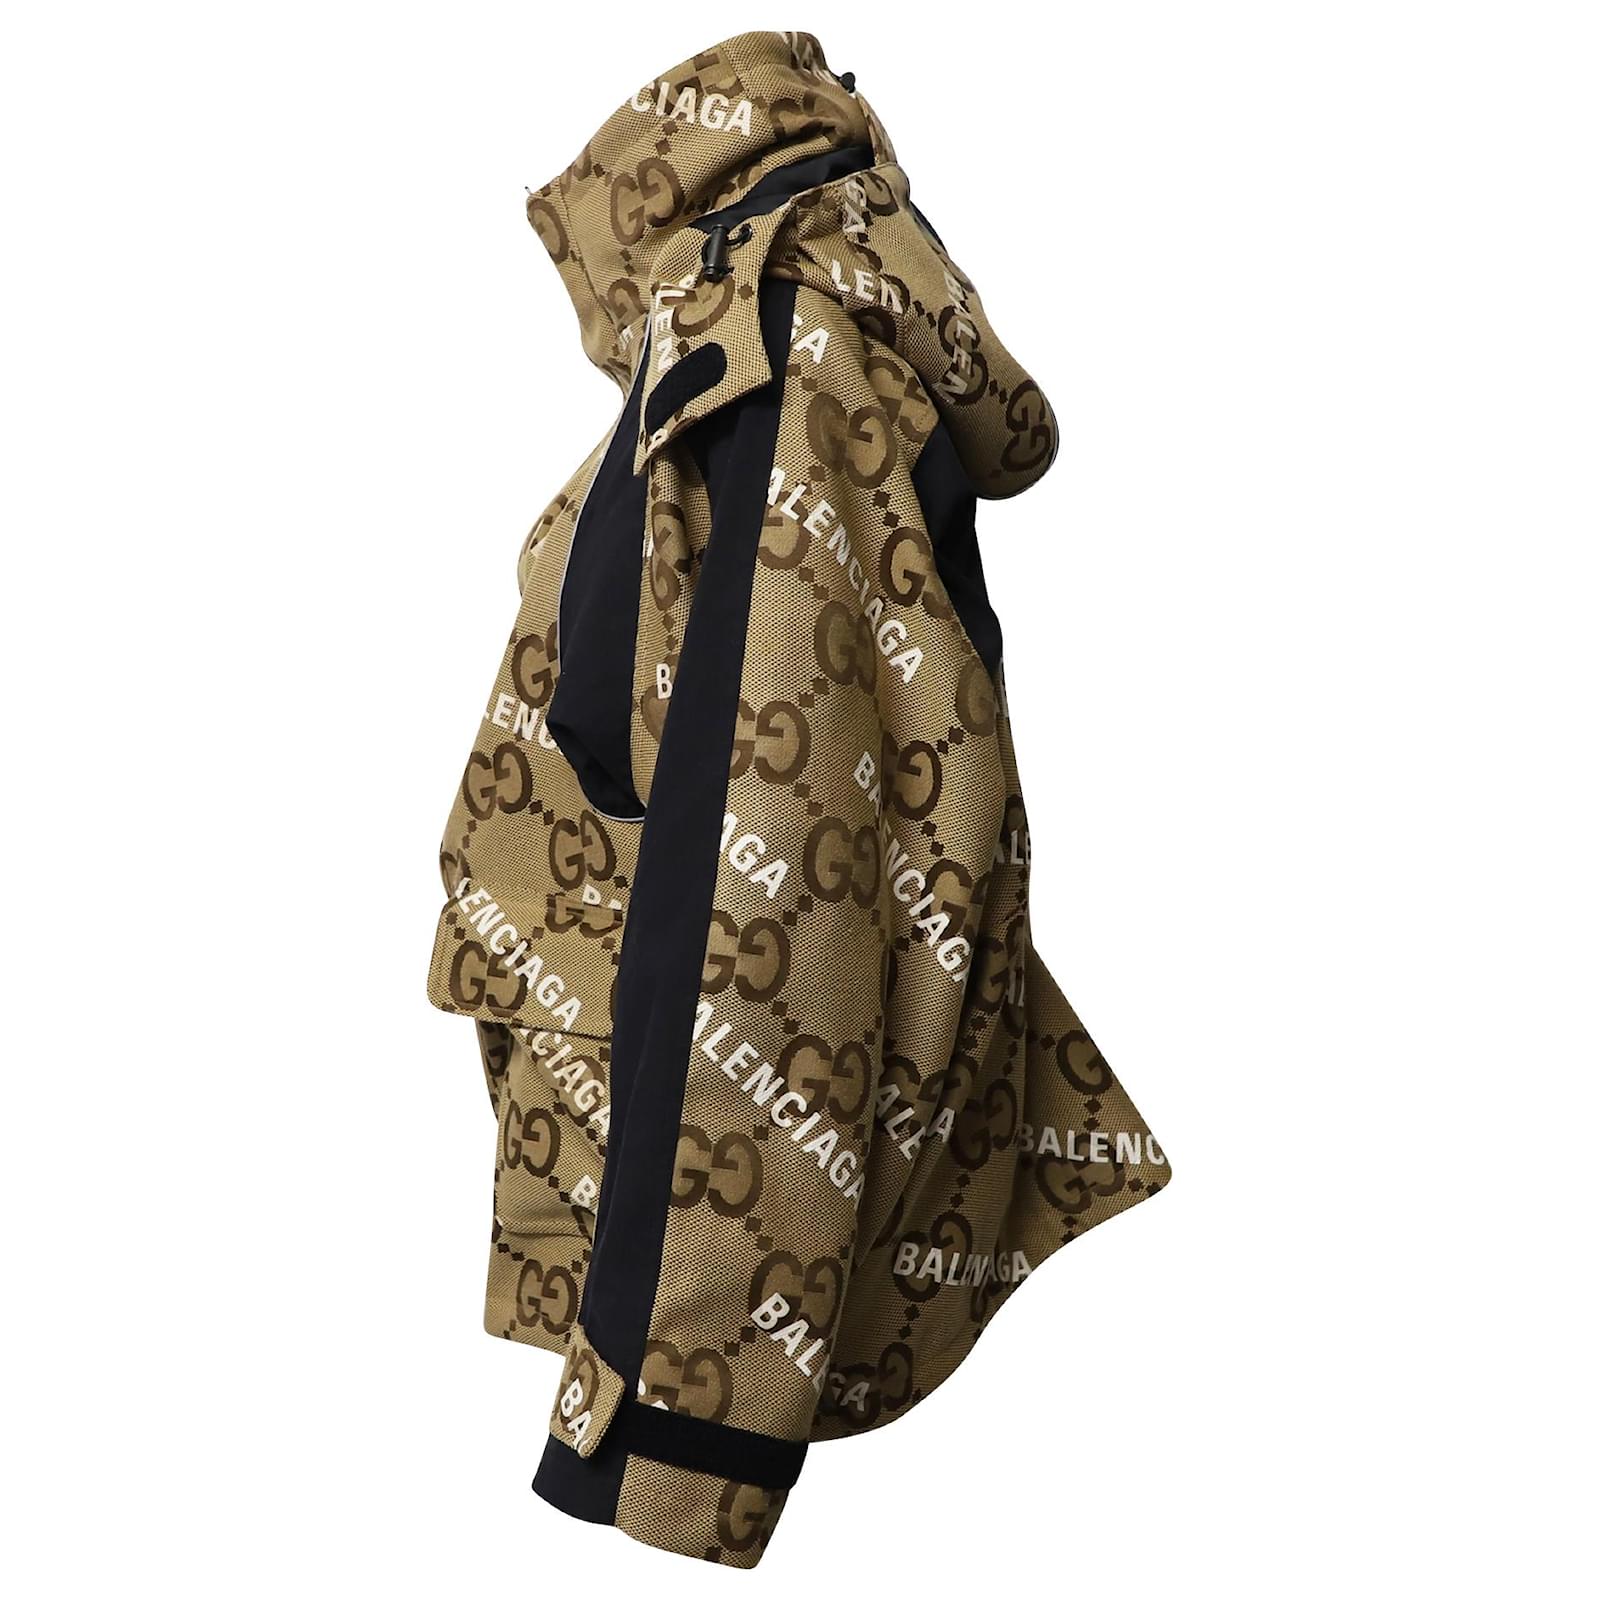 Limited Edition The Hacker Project Jumbo GG Jacket by Gucci x Balenciaga -  SLOANE ST. PERTH WA